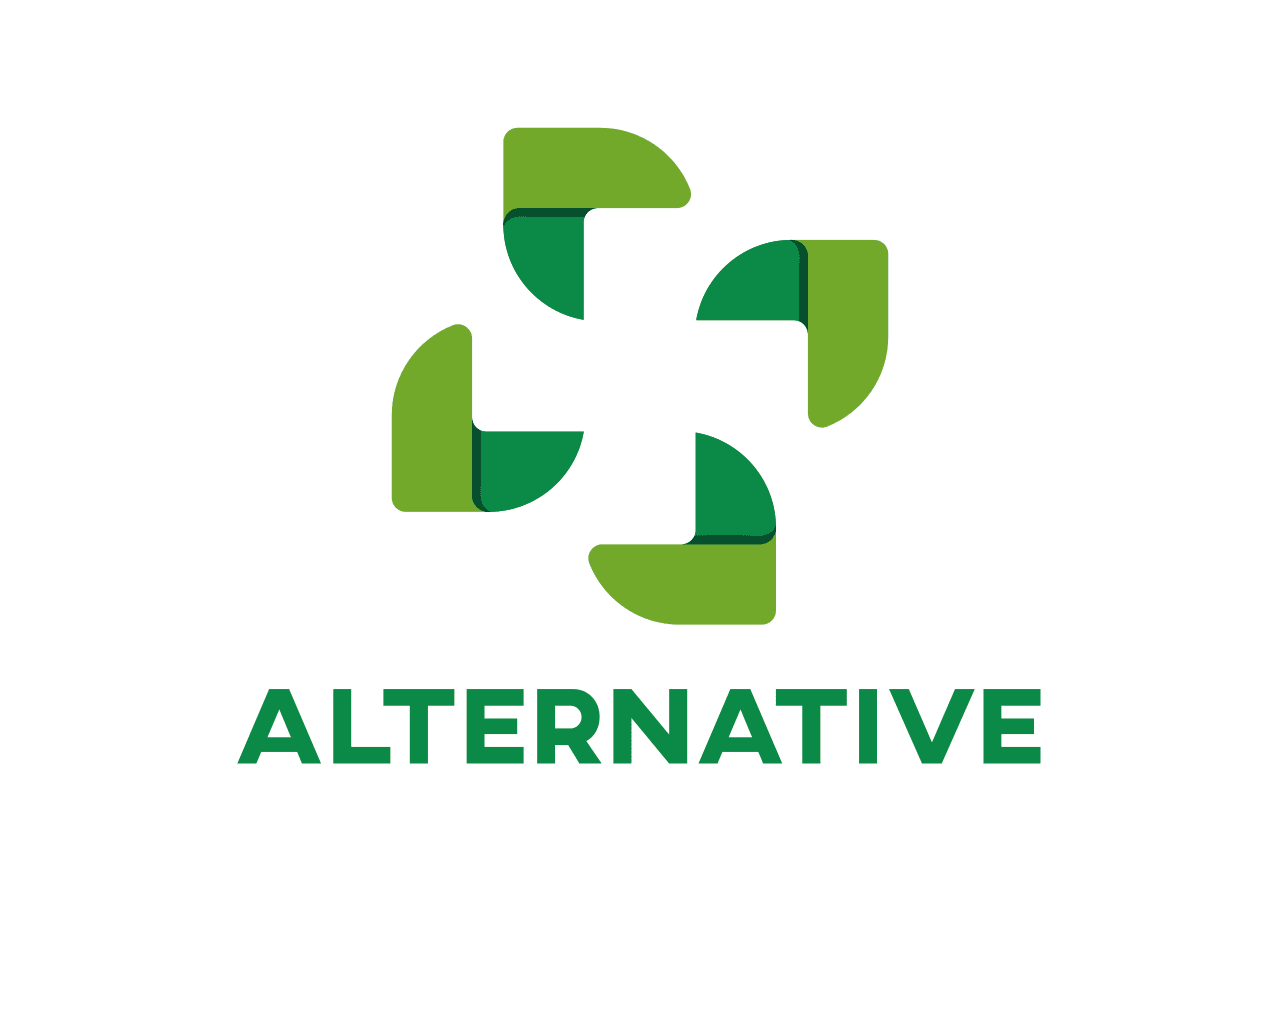 Alternative Logo ELV microfluidics in vitro system biomedical research